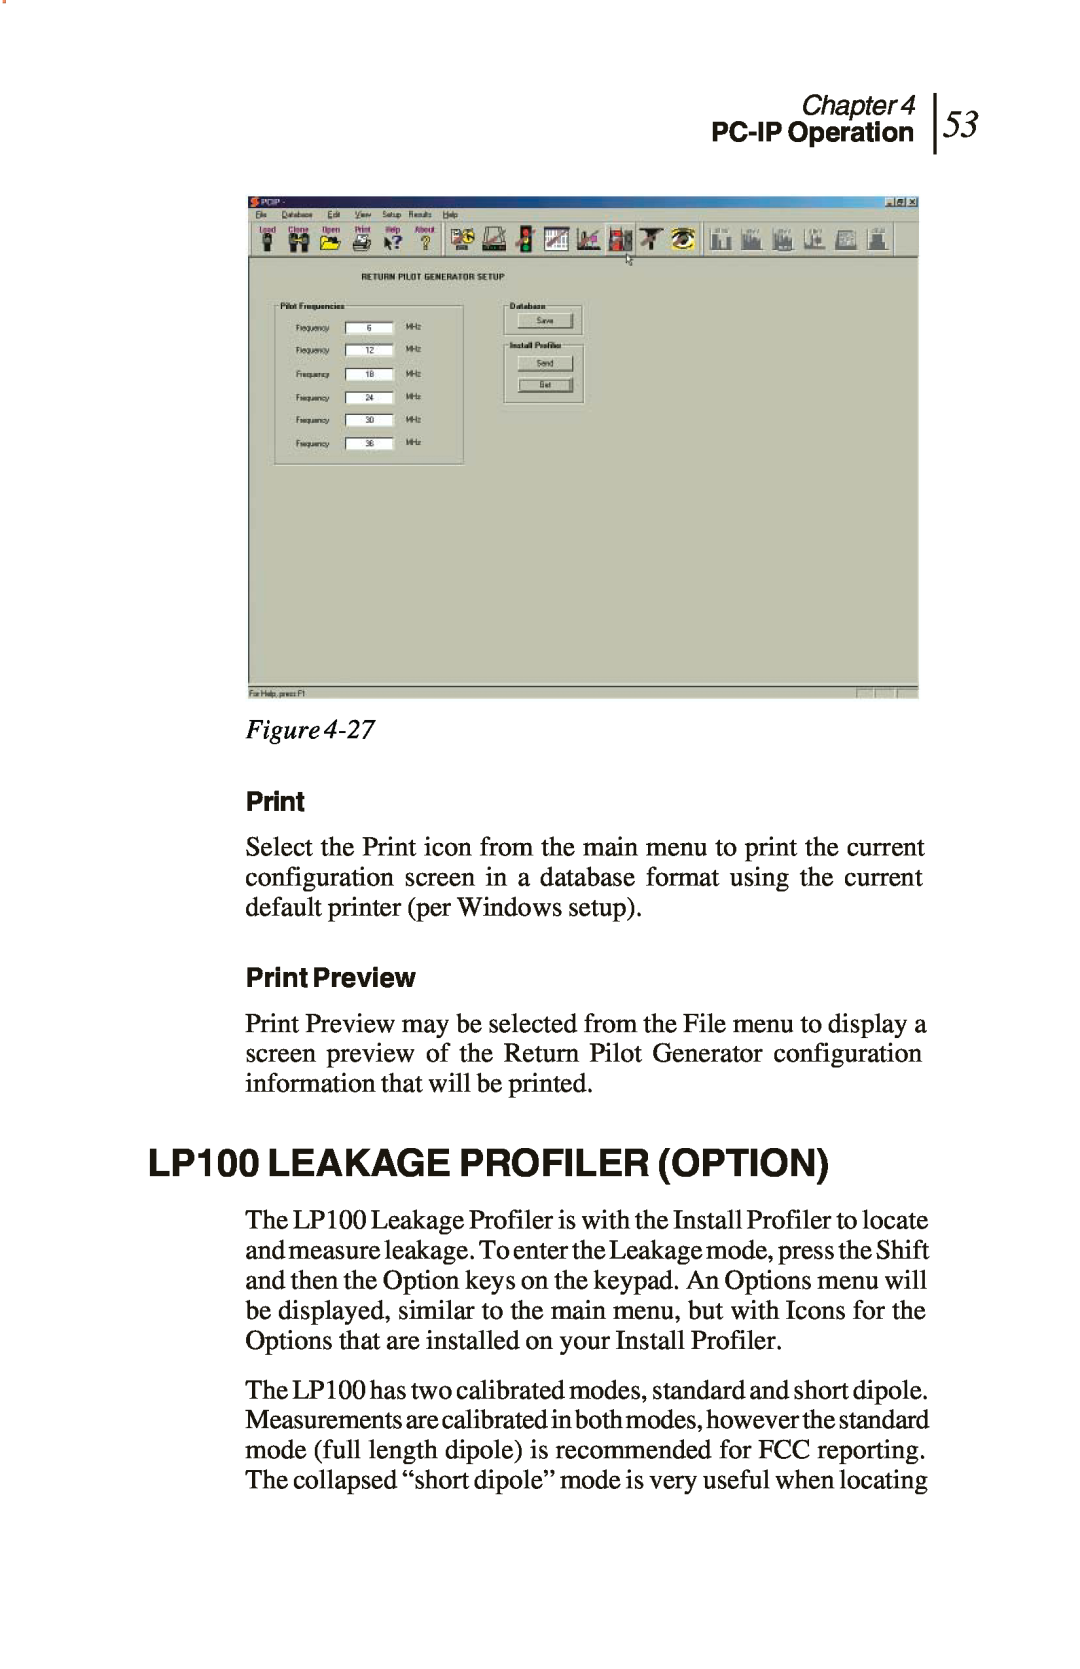 Sunrise Global CM250 IP, CM100 IP manual LP100 LEAKAGE PROFILER OPTION, Chapter, PC-IPOperation, Figure, Print Preview 